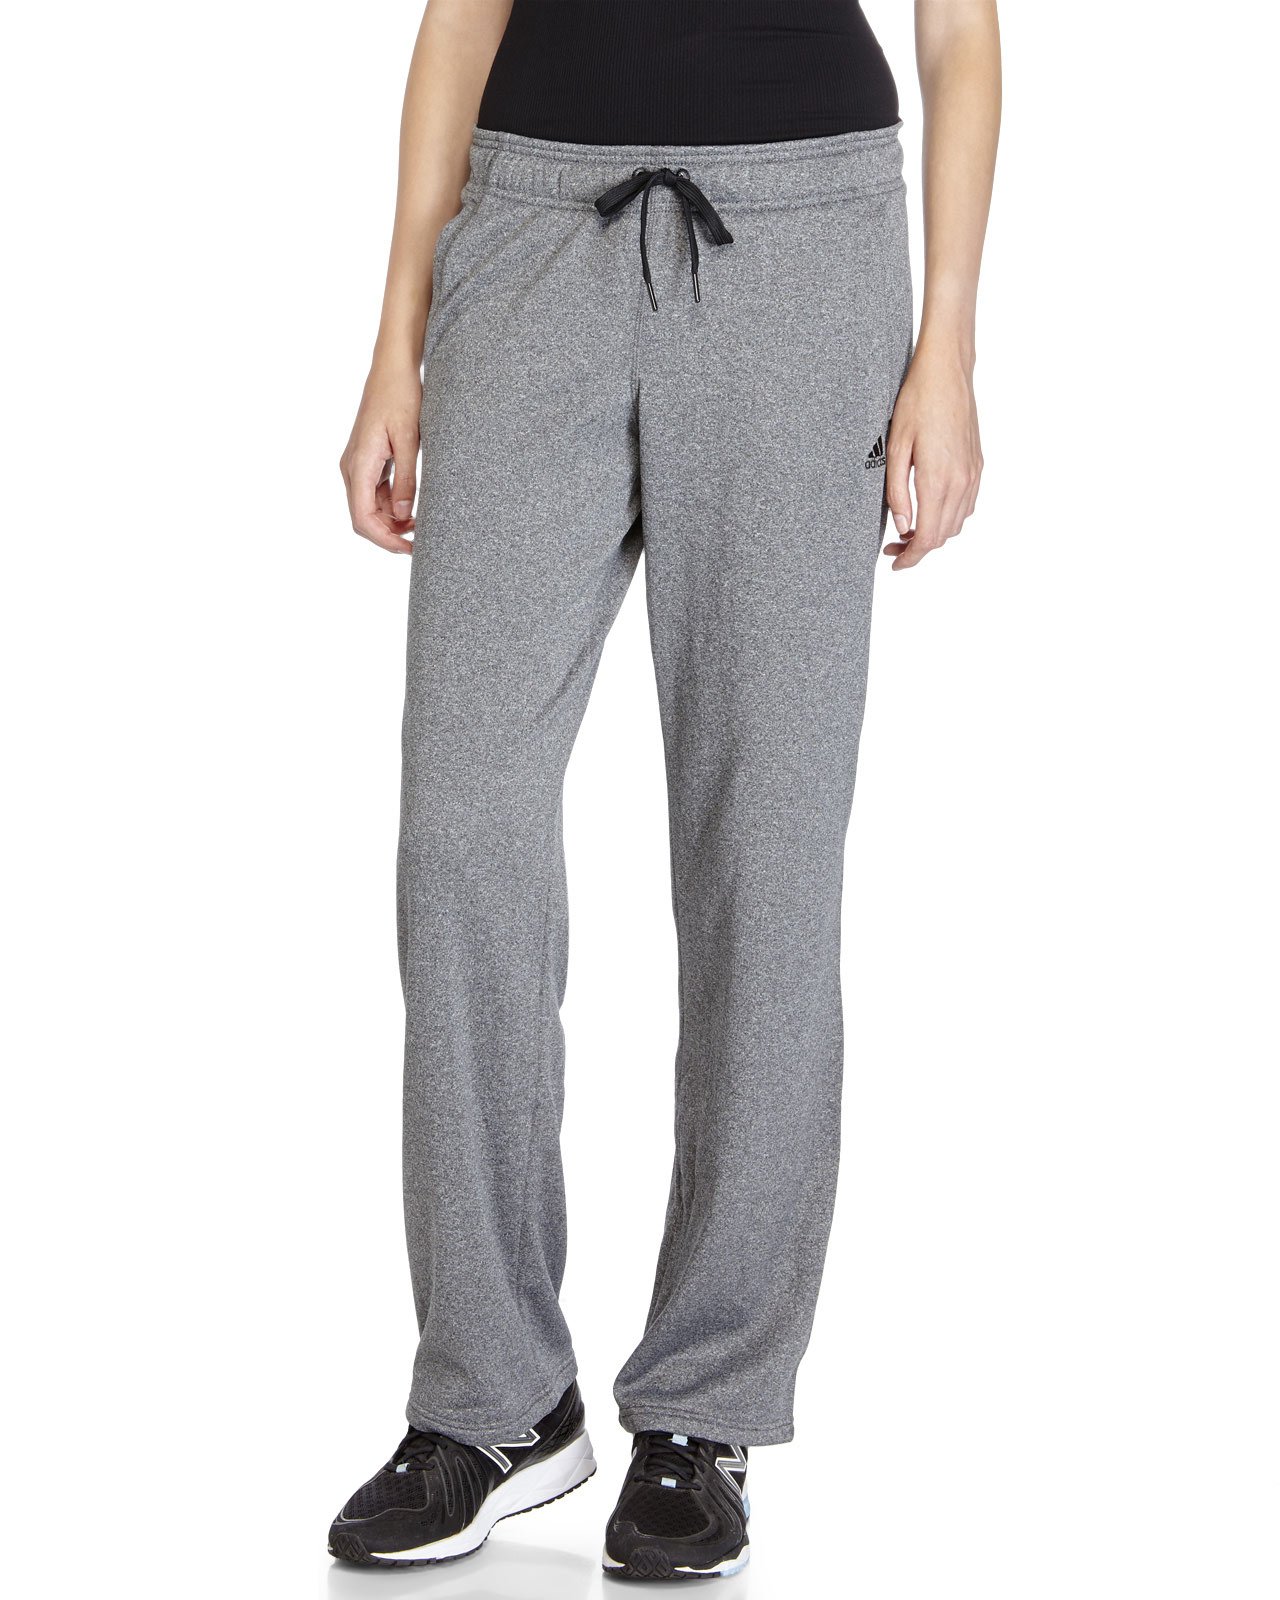 Lyst - Adidas Grey Drawstring Fleece Sweatpants in Gray